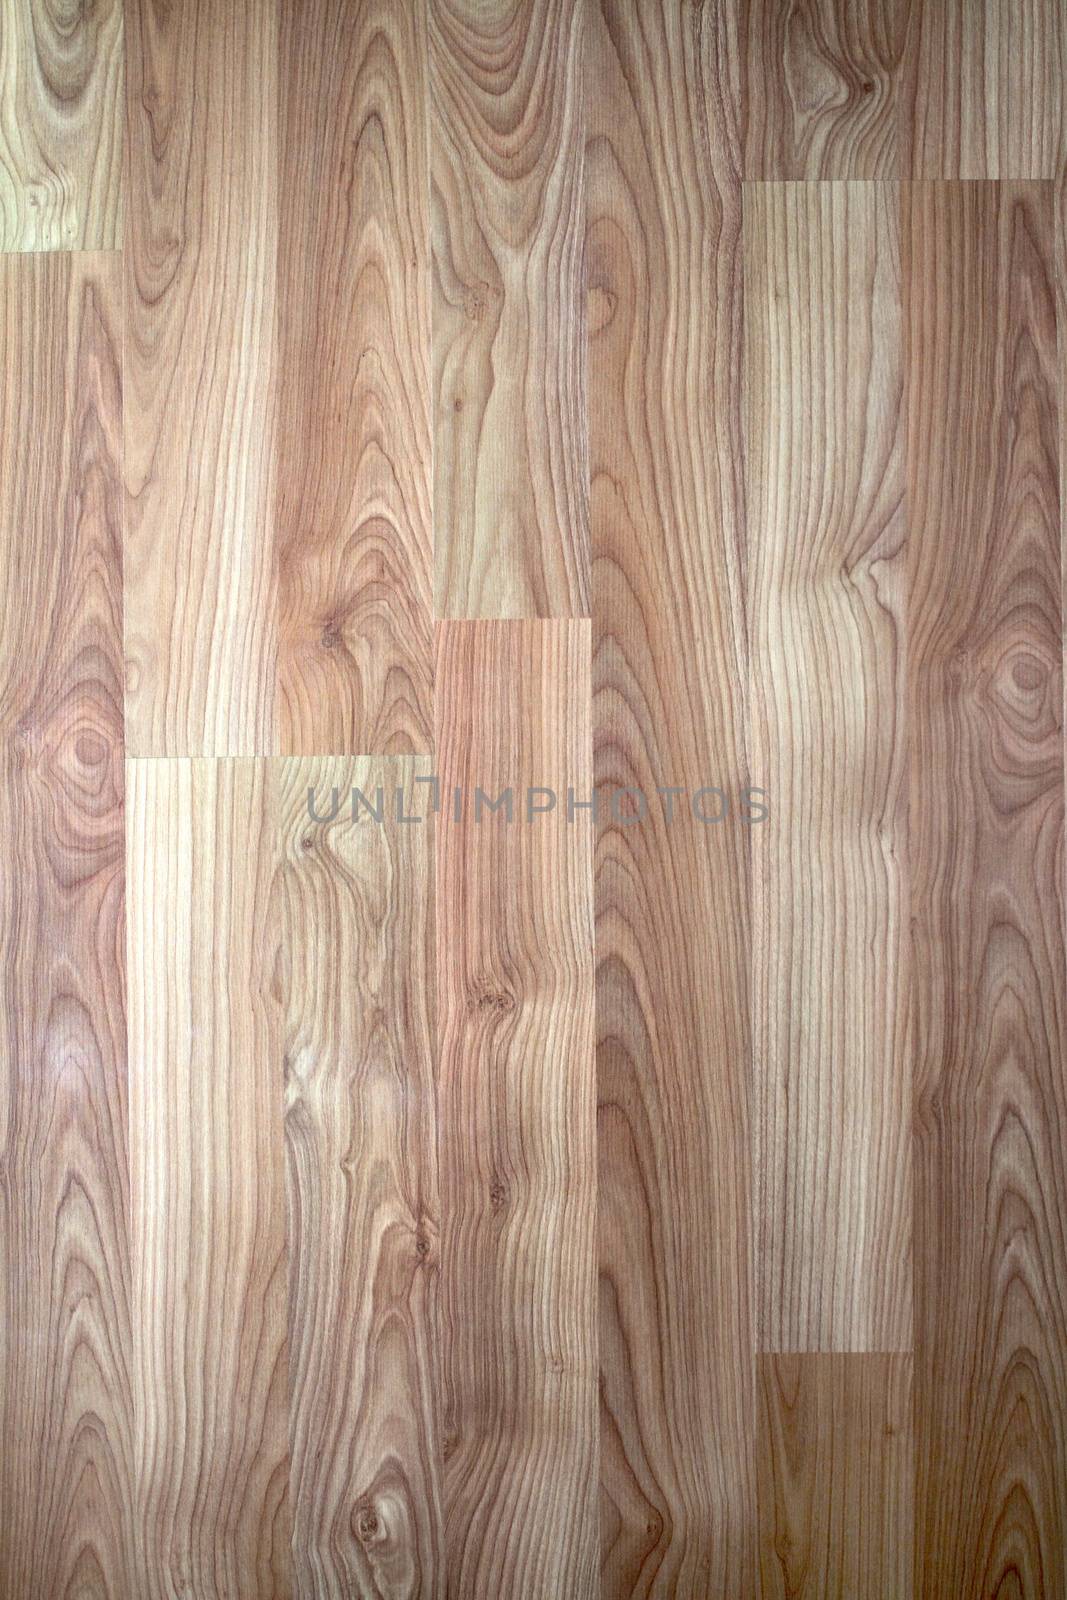 A close up shot of wooden flooring